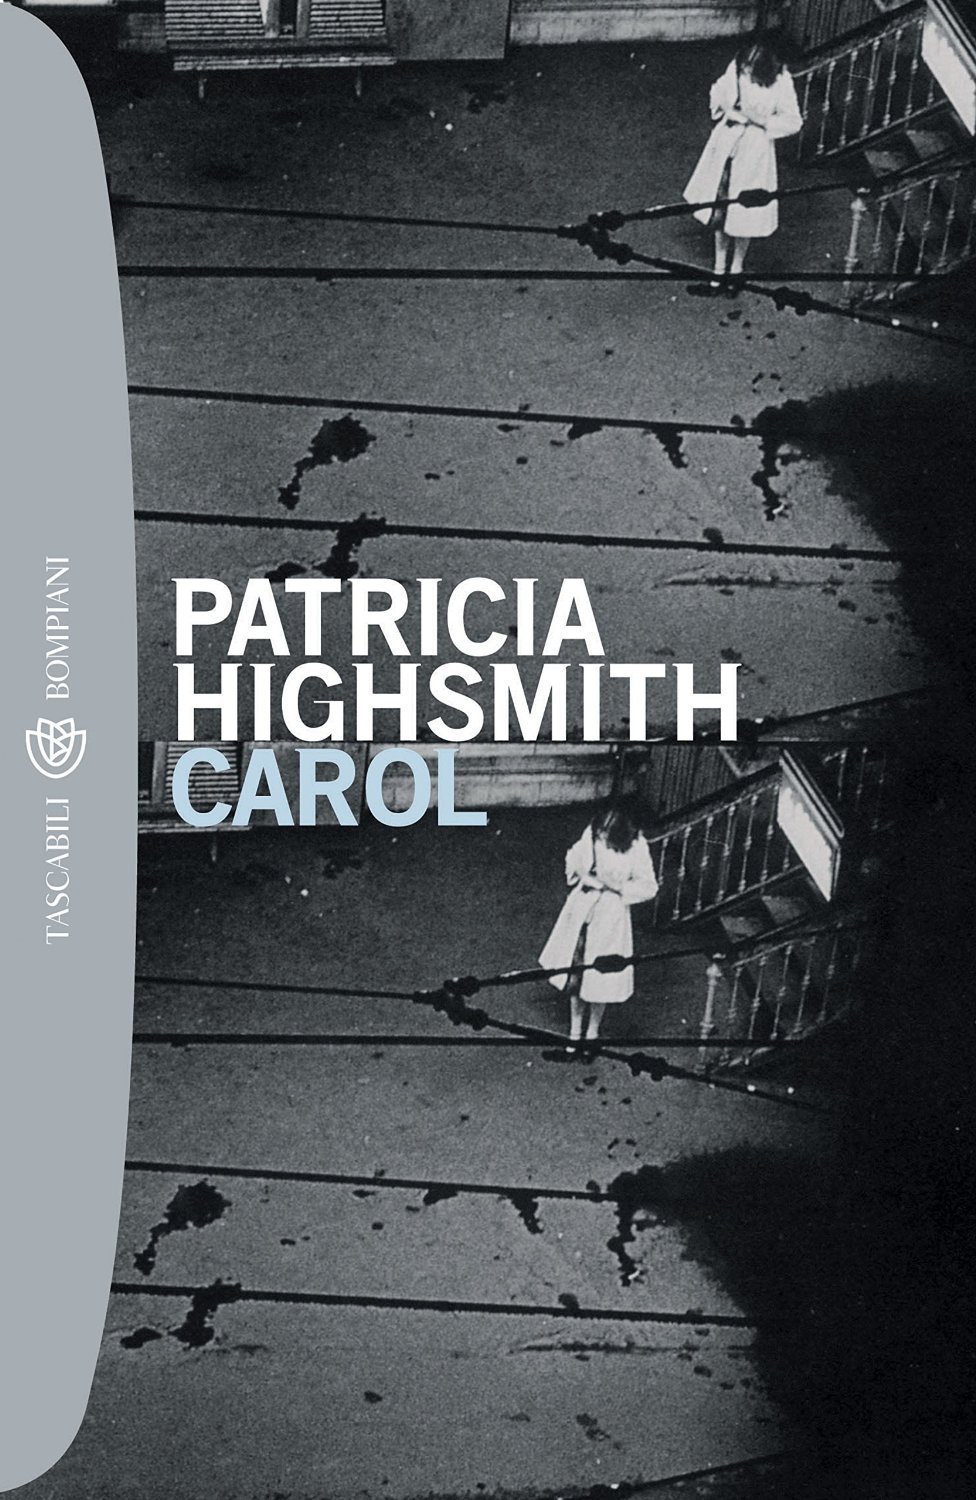 Patricia Highsmith: Carol (Paperback, Italiano language, 2001, Bompiani)